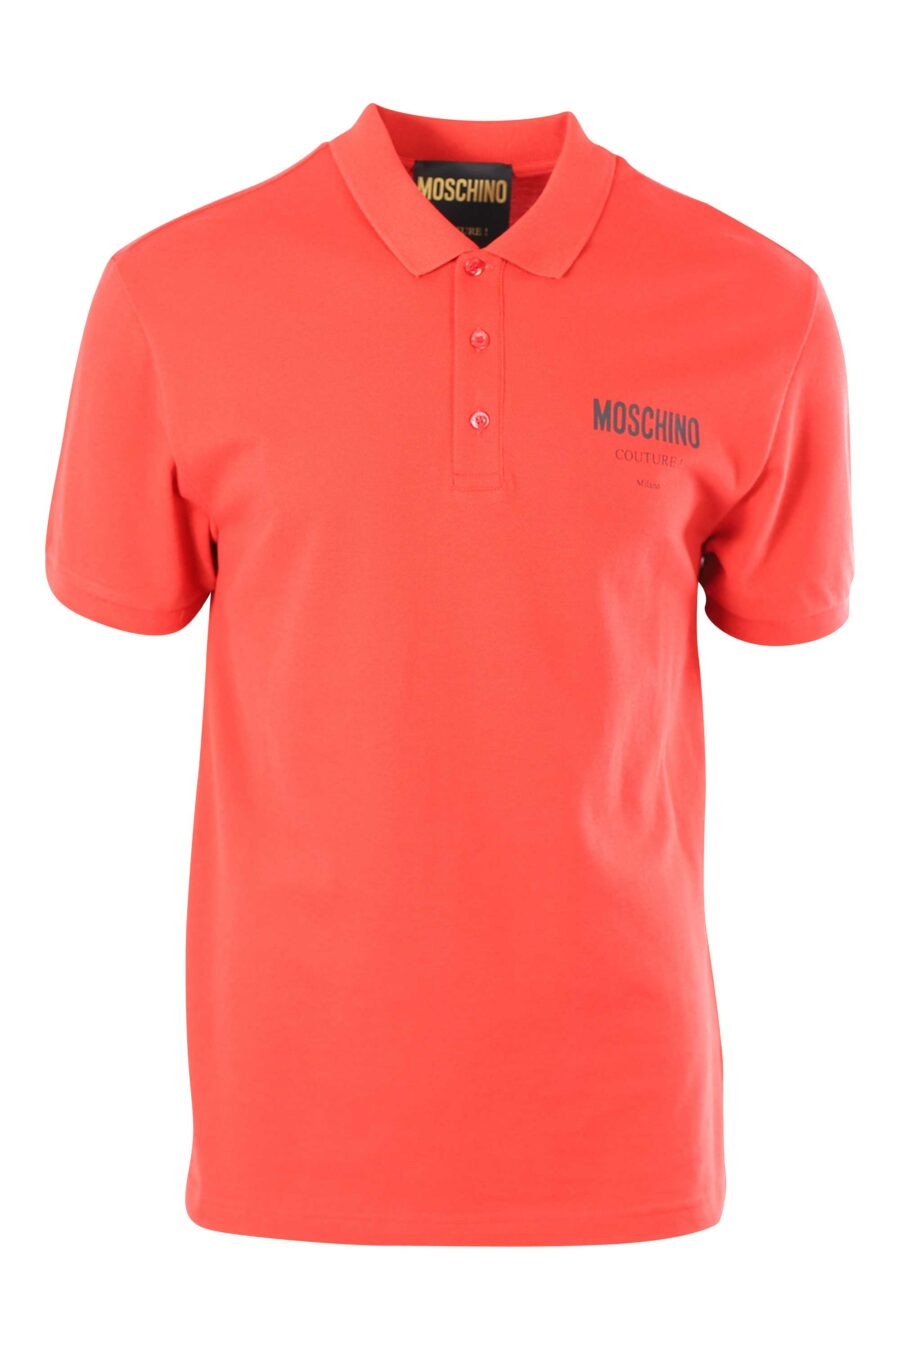 Red polo shirt with mini-logo "milano" - 889316176728